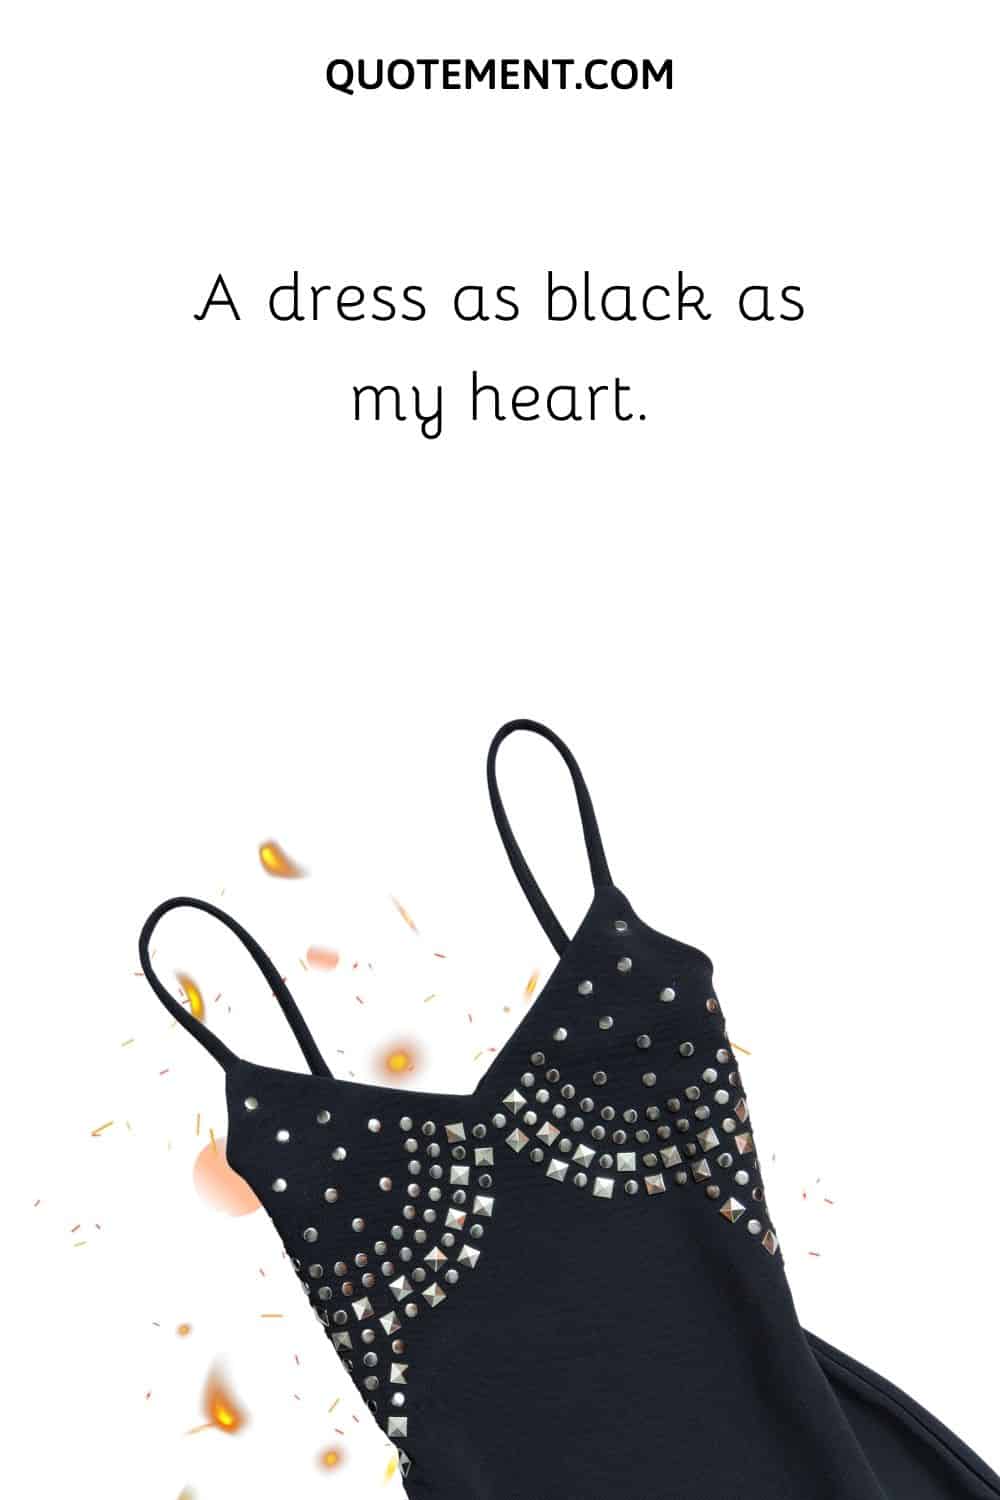 A dress as black as my heart.